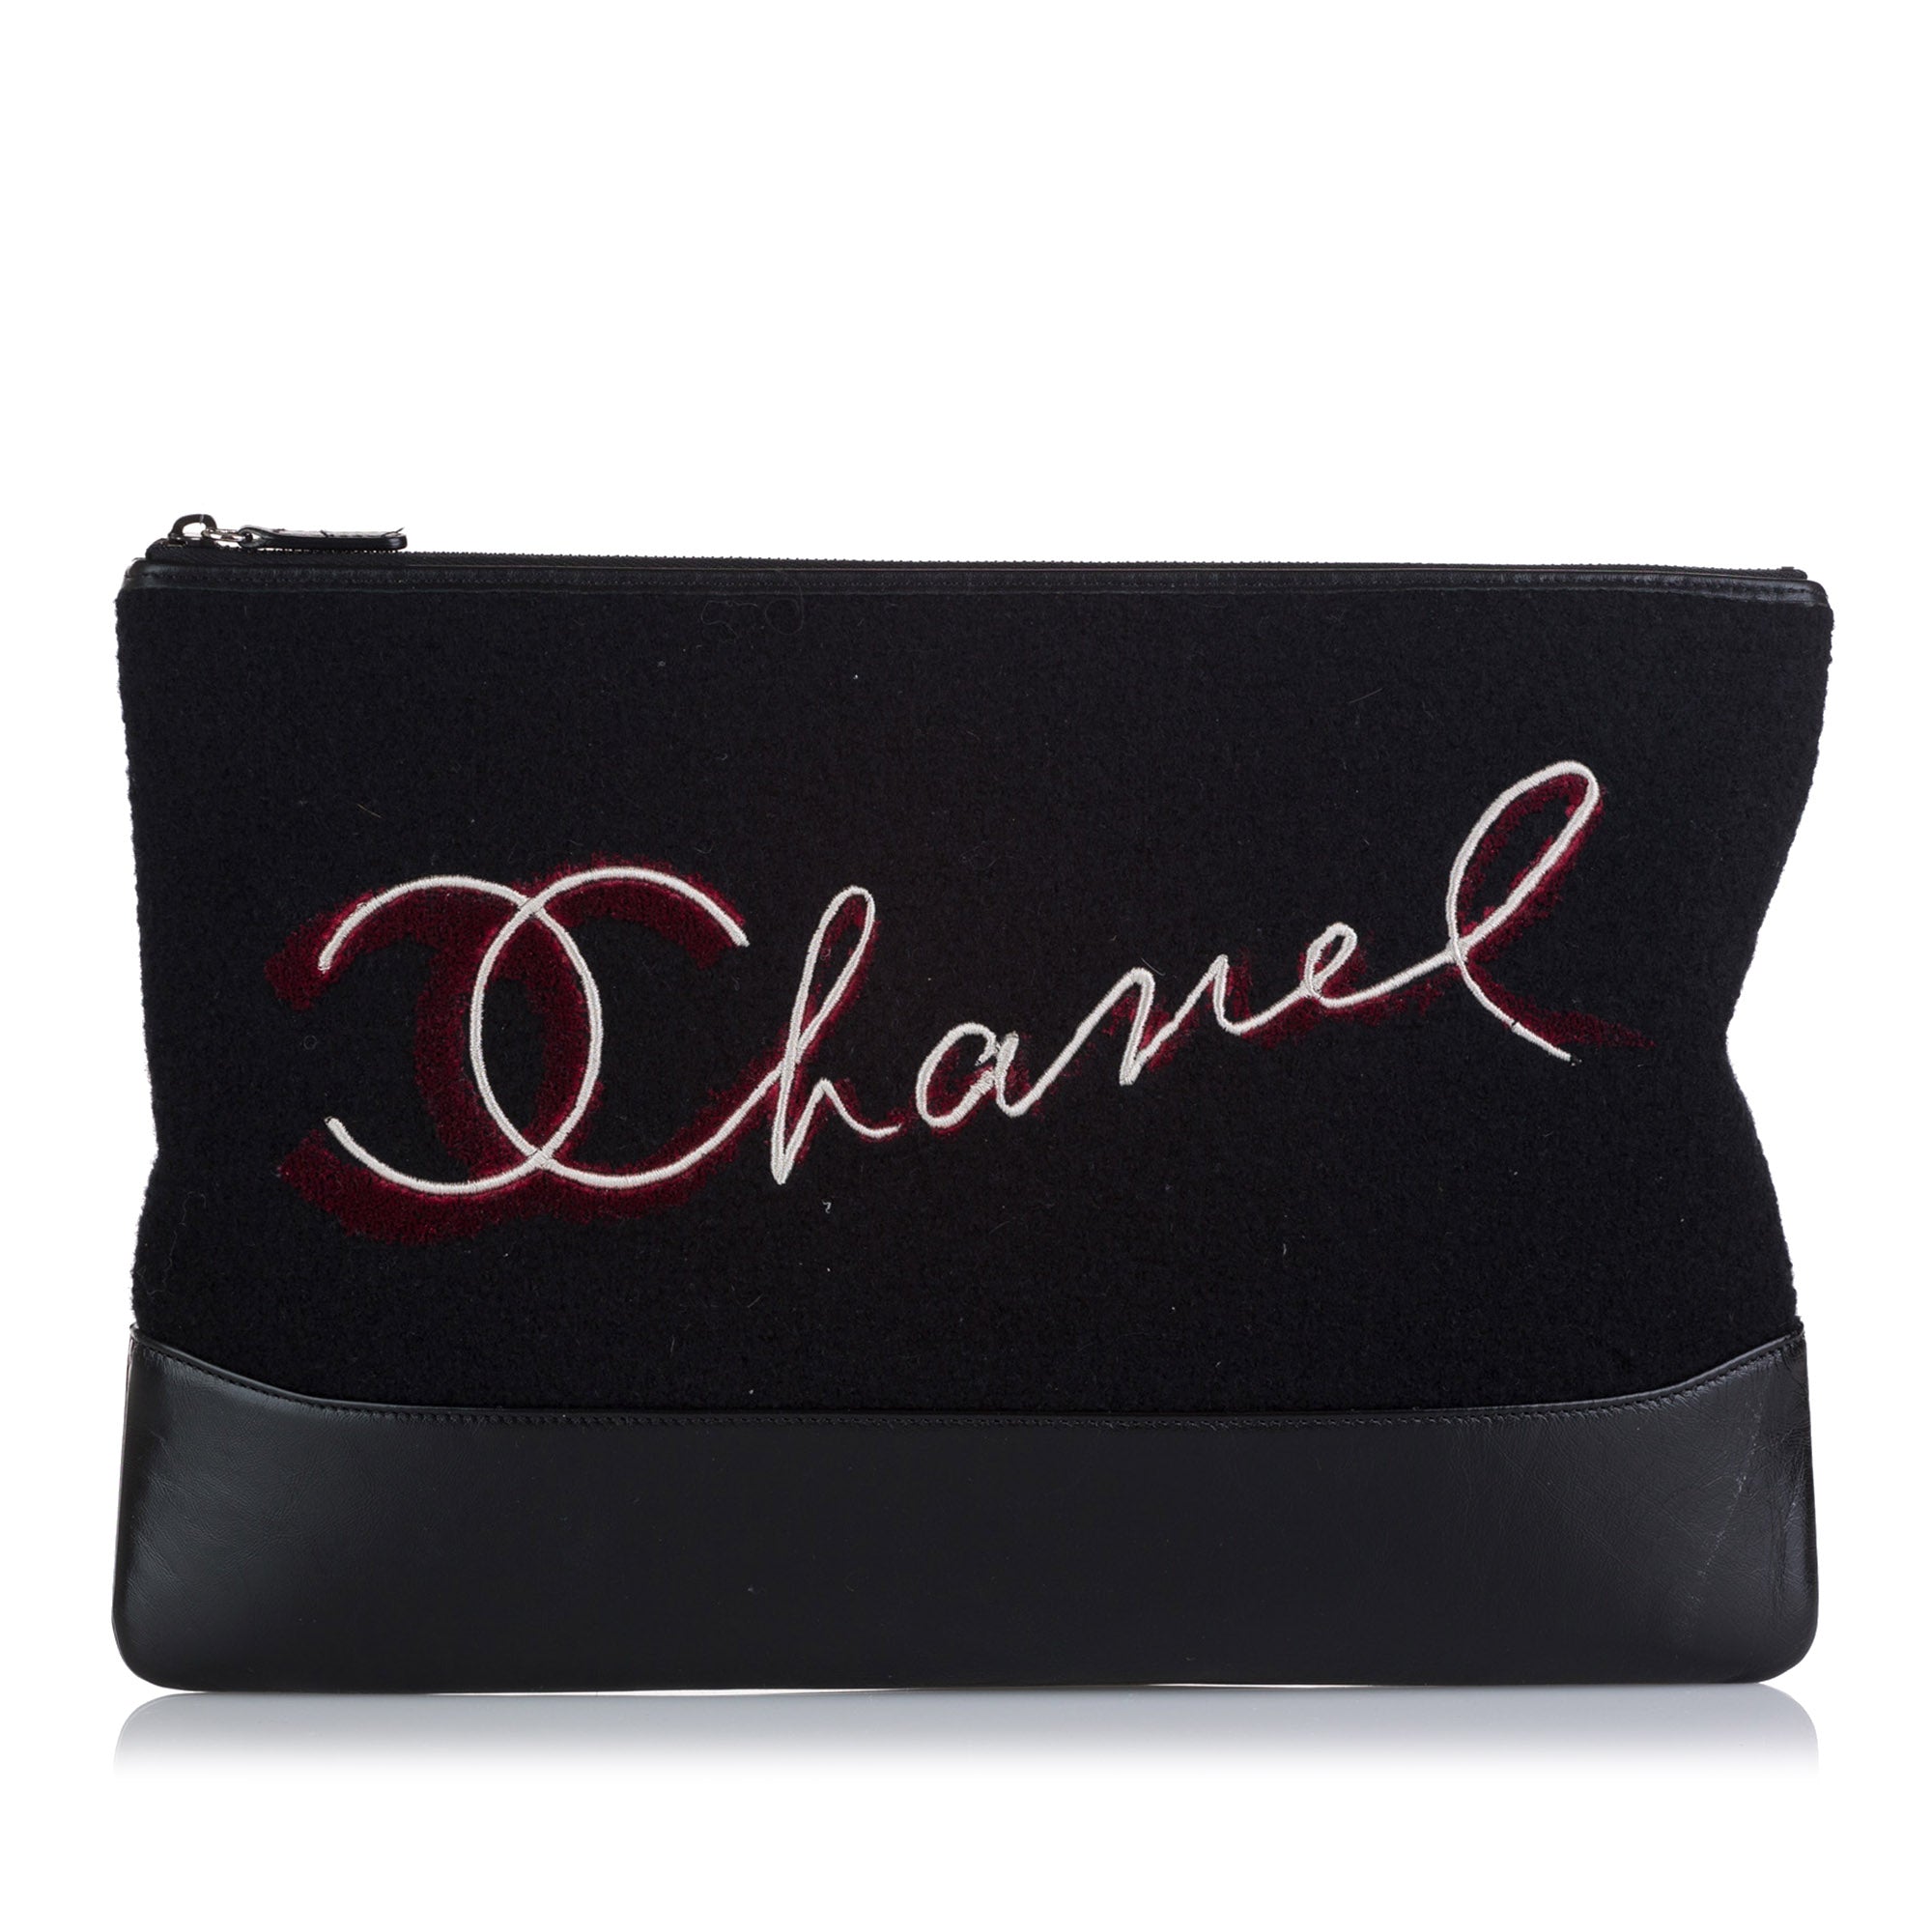 Karl Lagerfeld loves Chanel, Black Chanel Paris Salzburg Clutch Bag